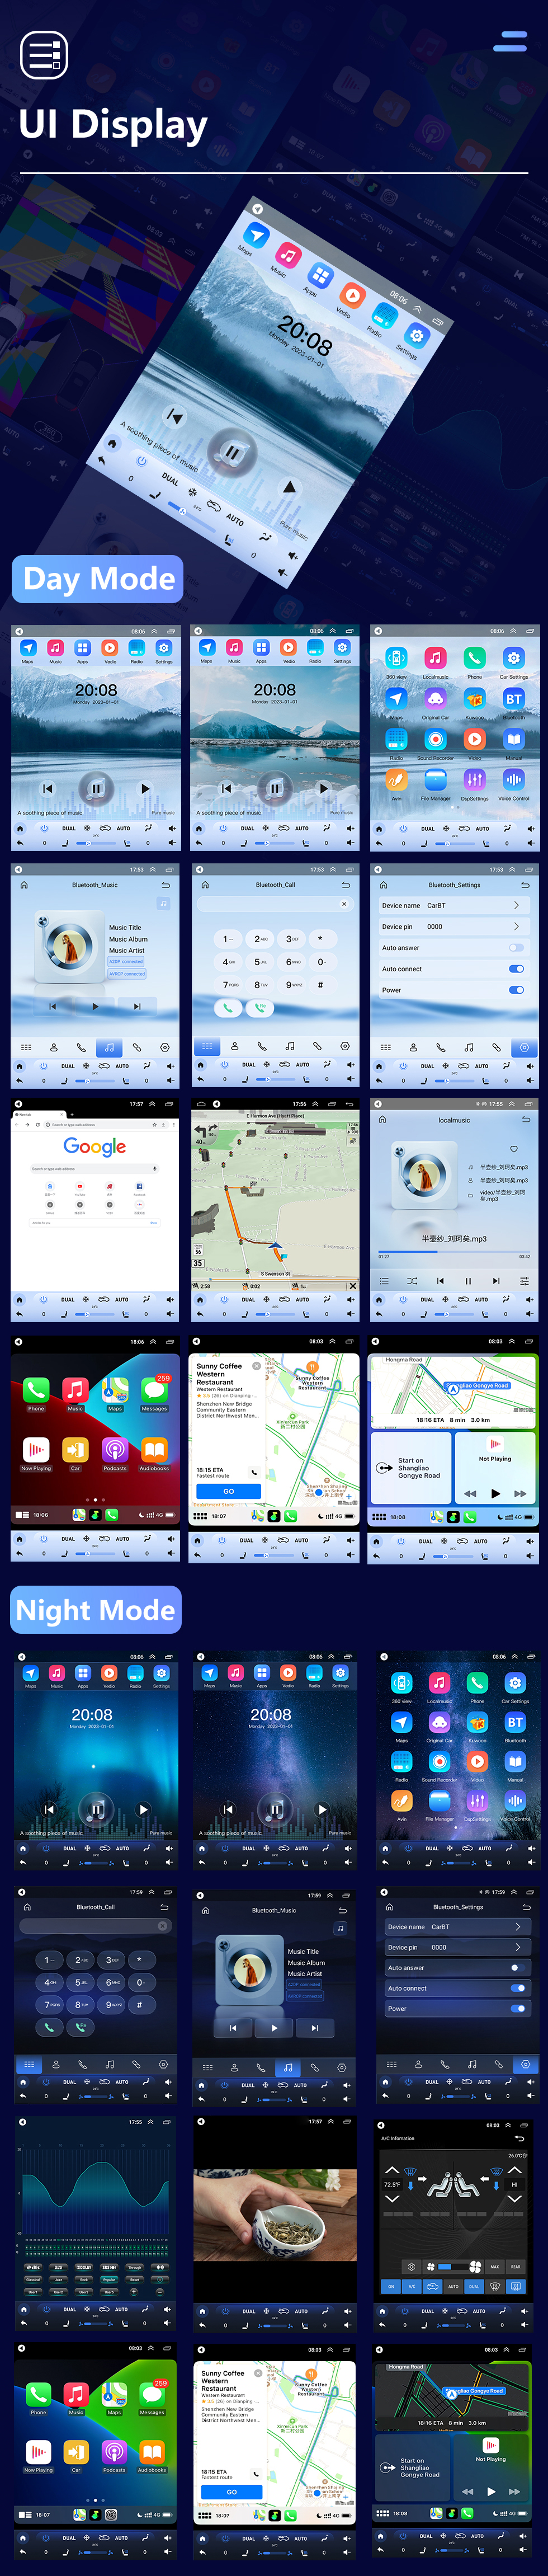 Seicane OEM HD Touchscreen 9,7 Zoll Android 10.0 Radio für 2018 Nissan NAVARA Terra Auto A/C mit GPS Navi System Mirror Link Bluetooth Musik WIFI Unterstützung OBD2 DVR SWC